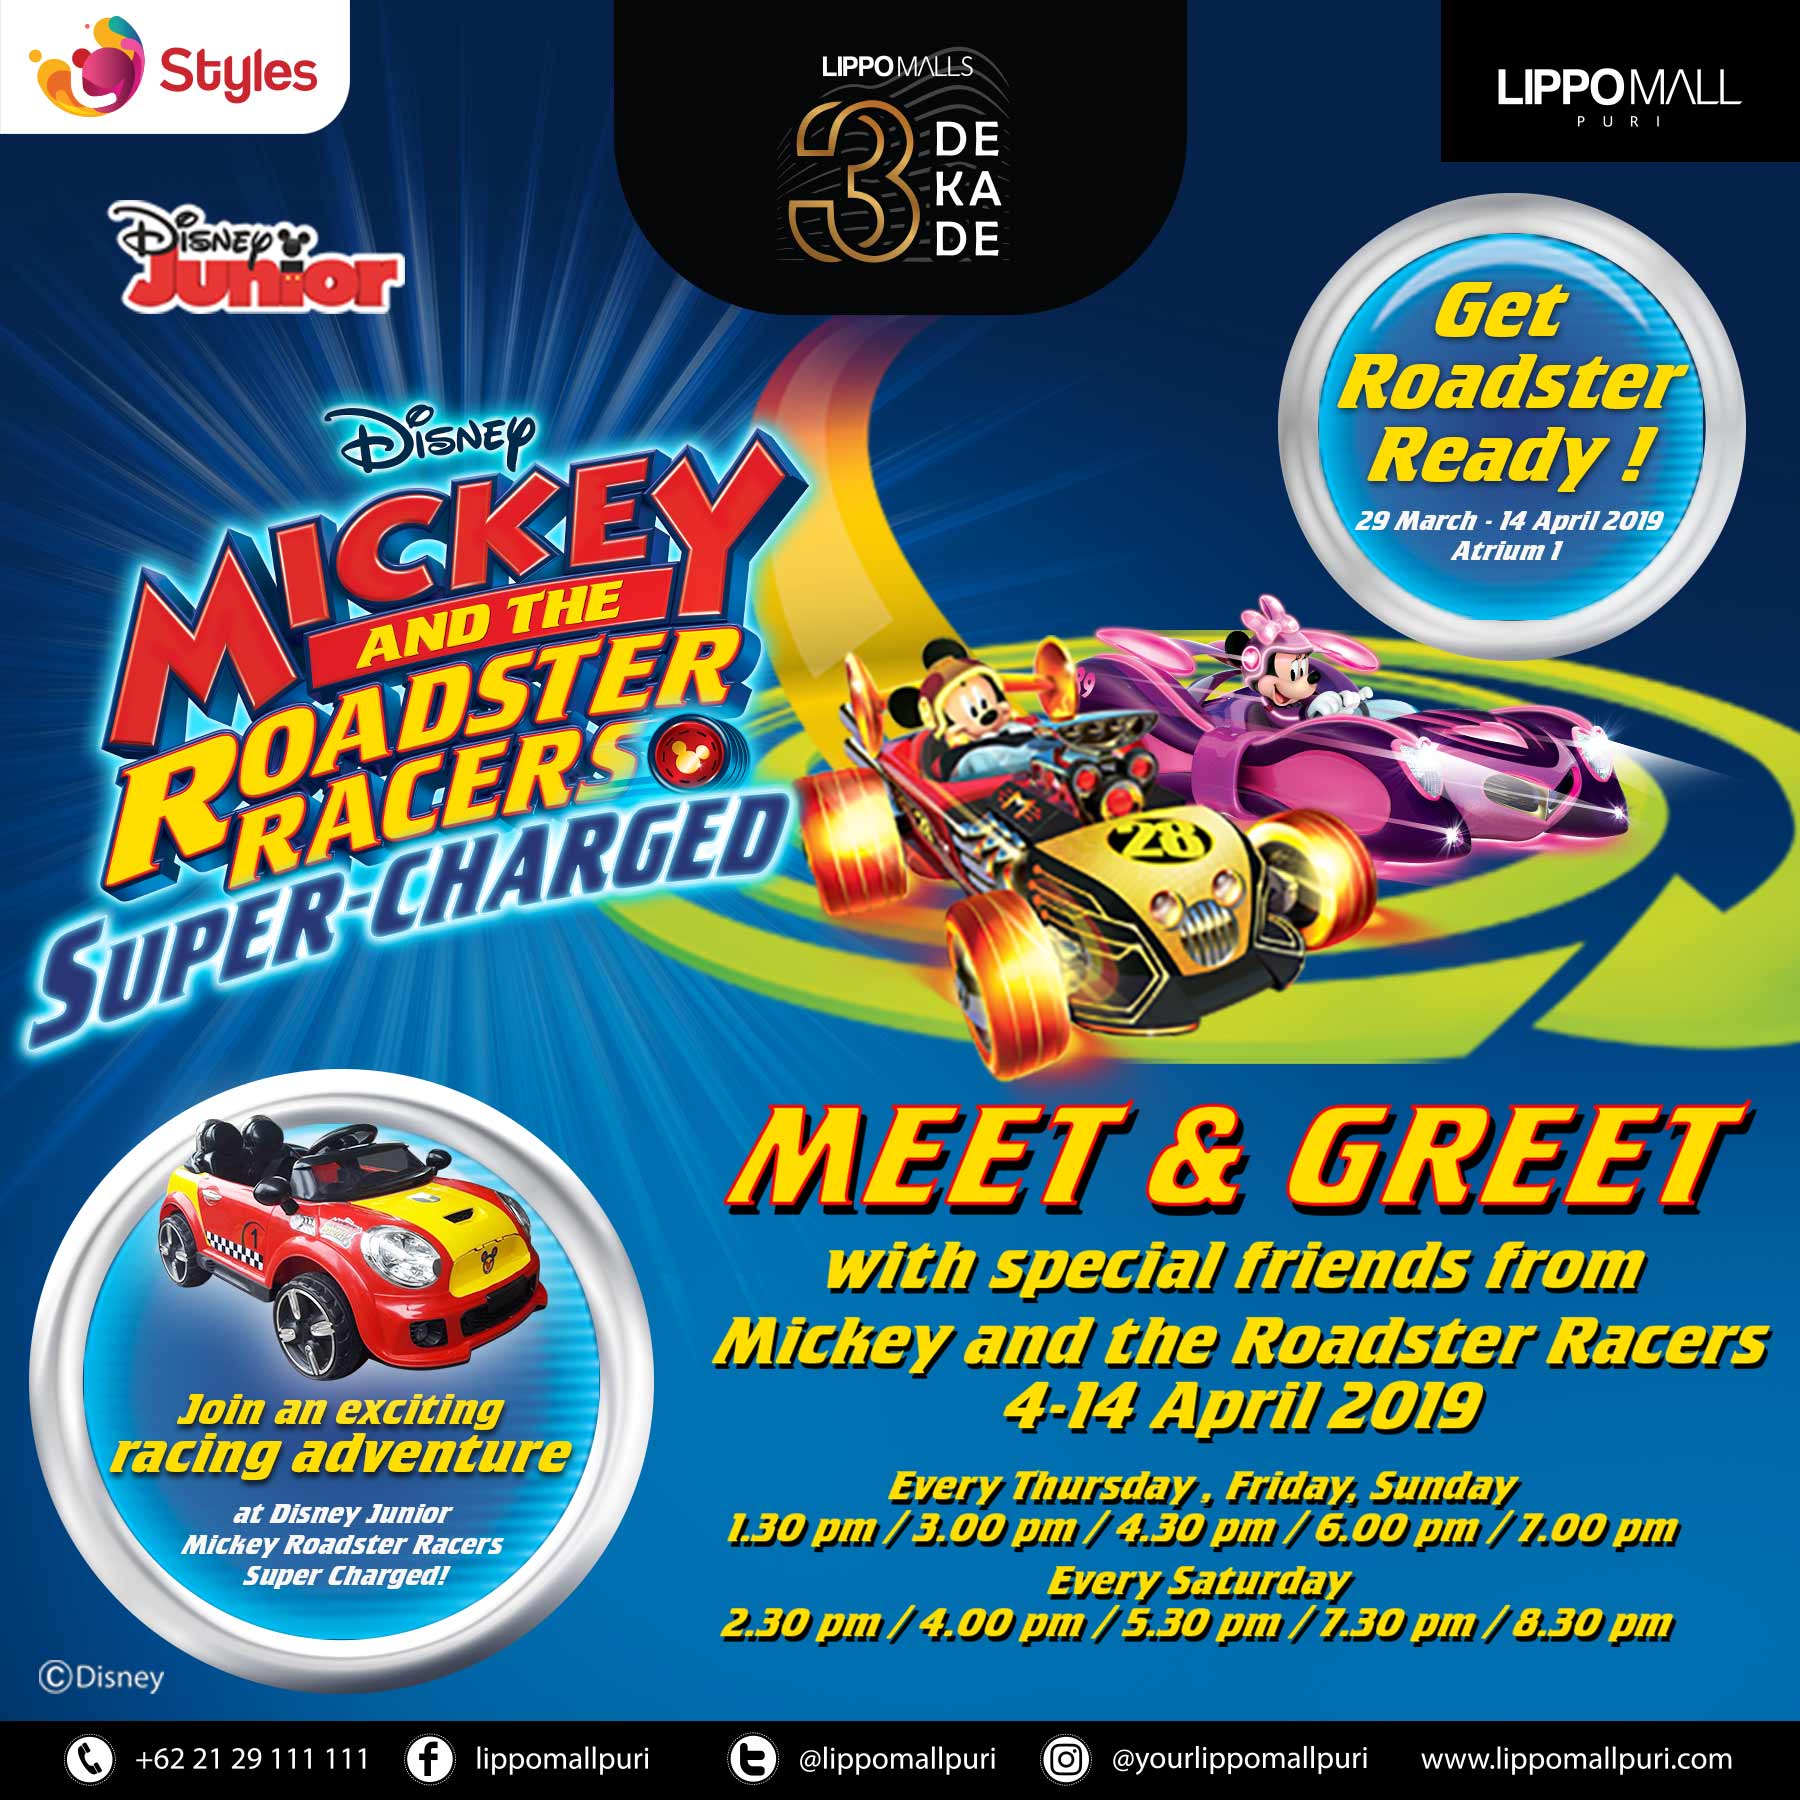 Mickey Roadster Racer in lippo mall puri st. moritz